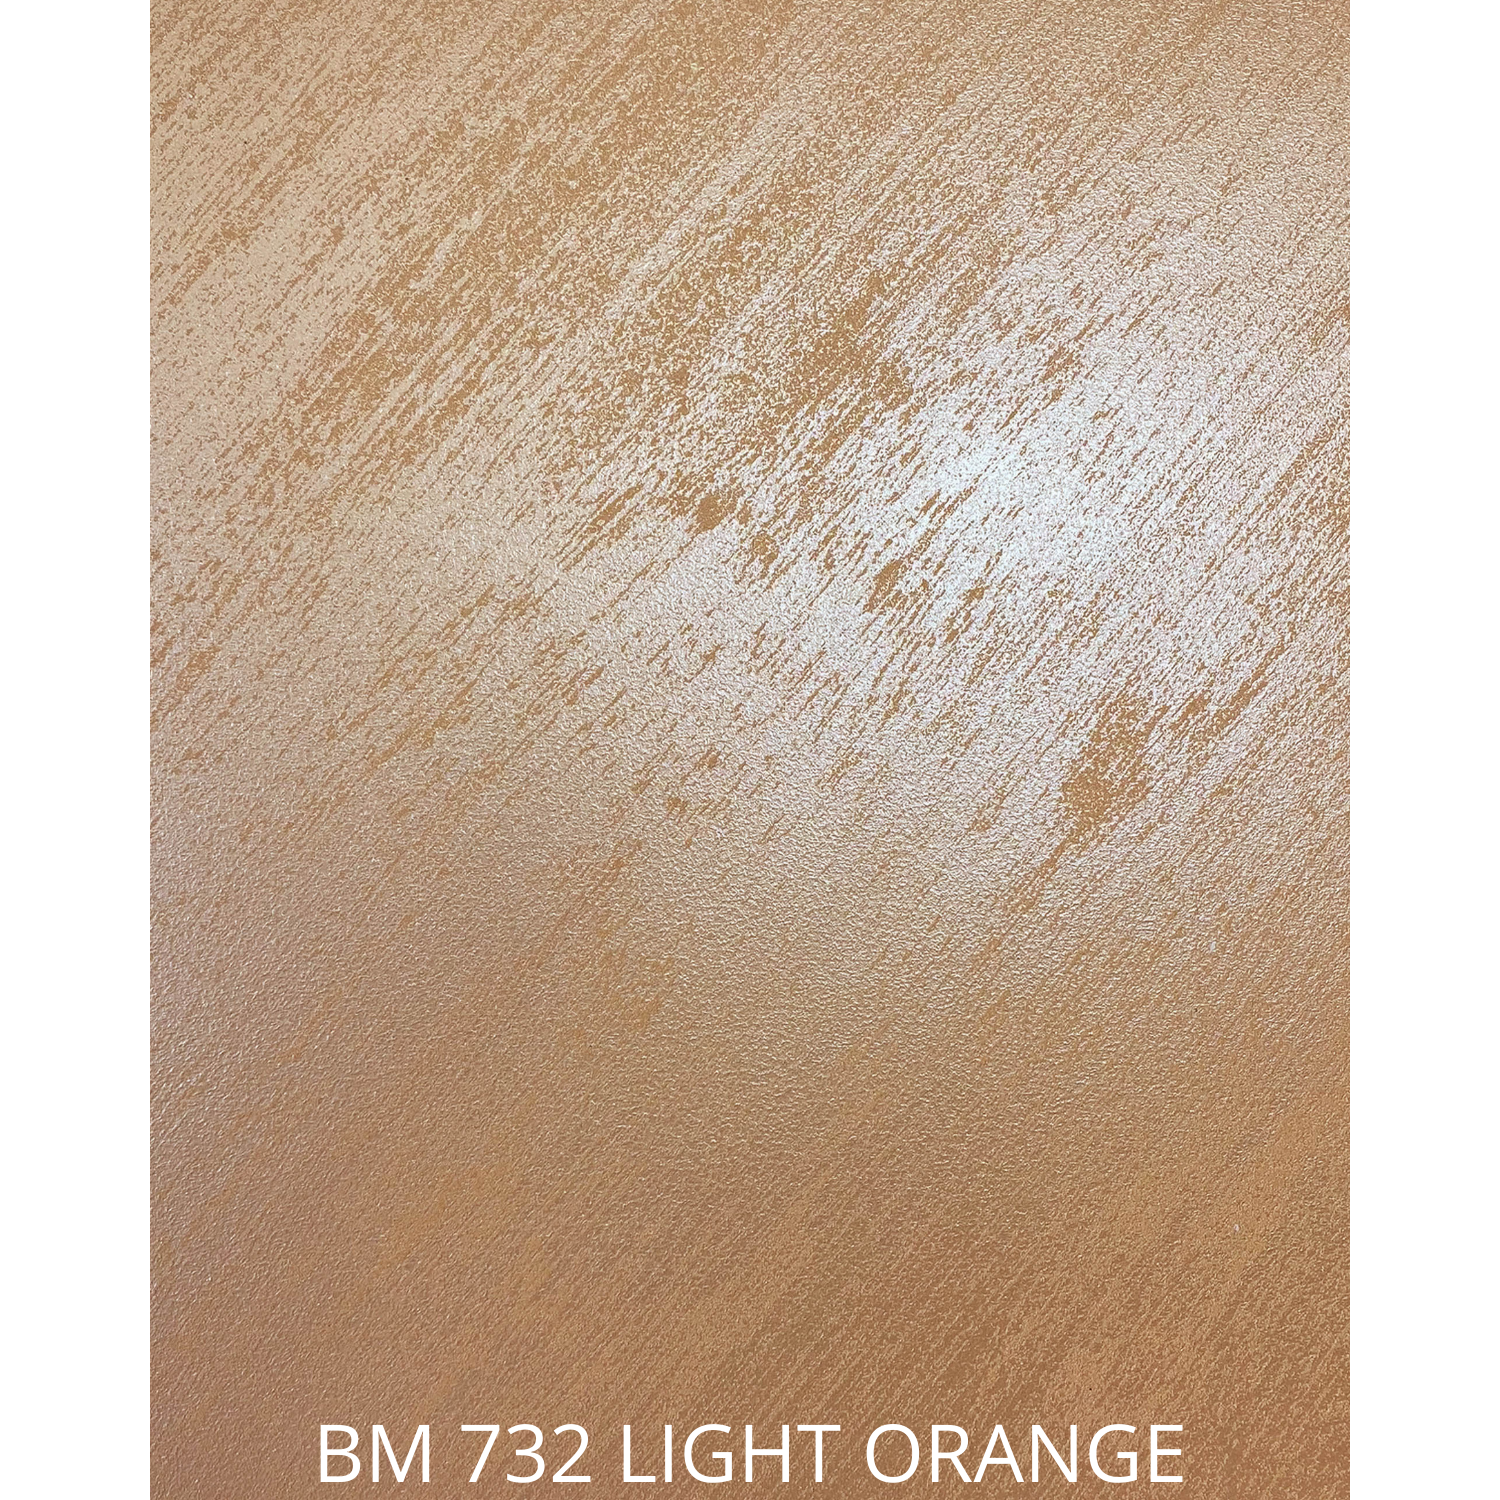 BM 732 LIGHT ORANGE